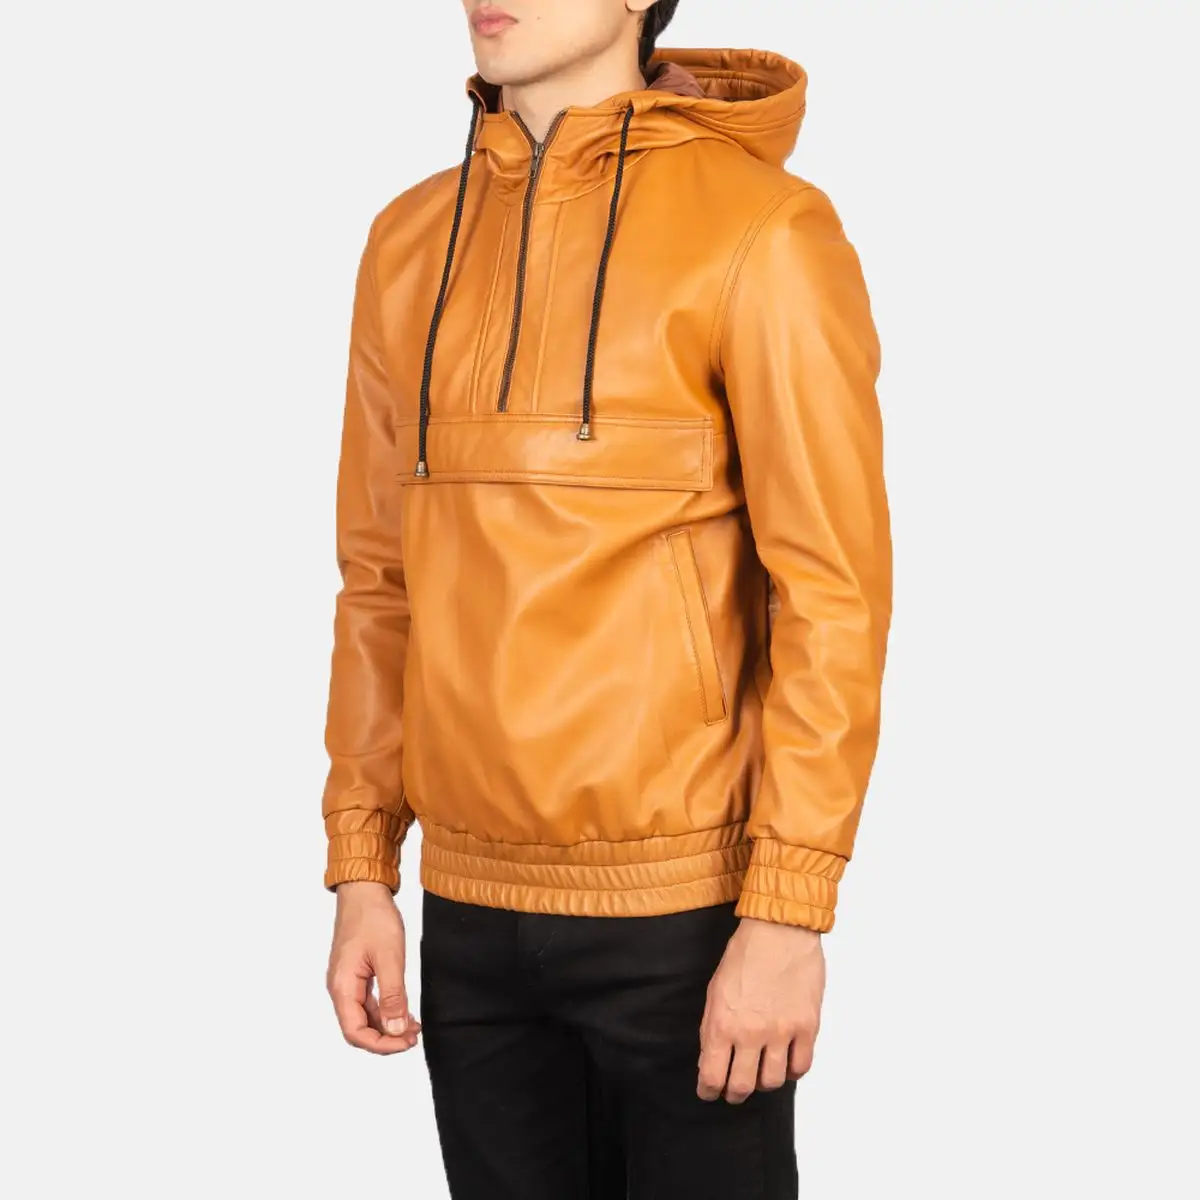 Brown leather hoodie half zip pullover jacket polyester lining men custom logo jackets